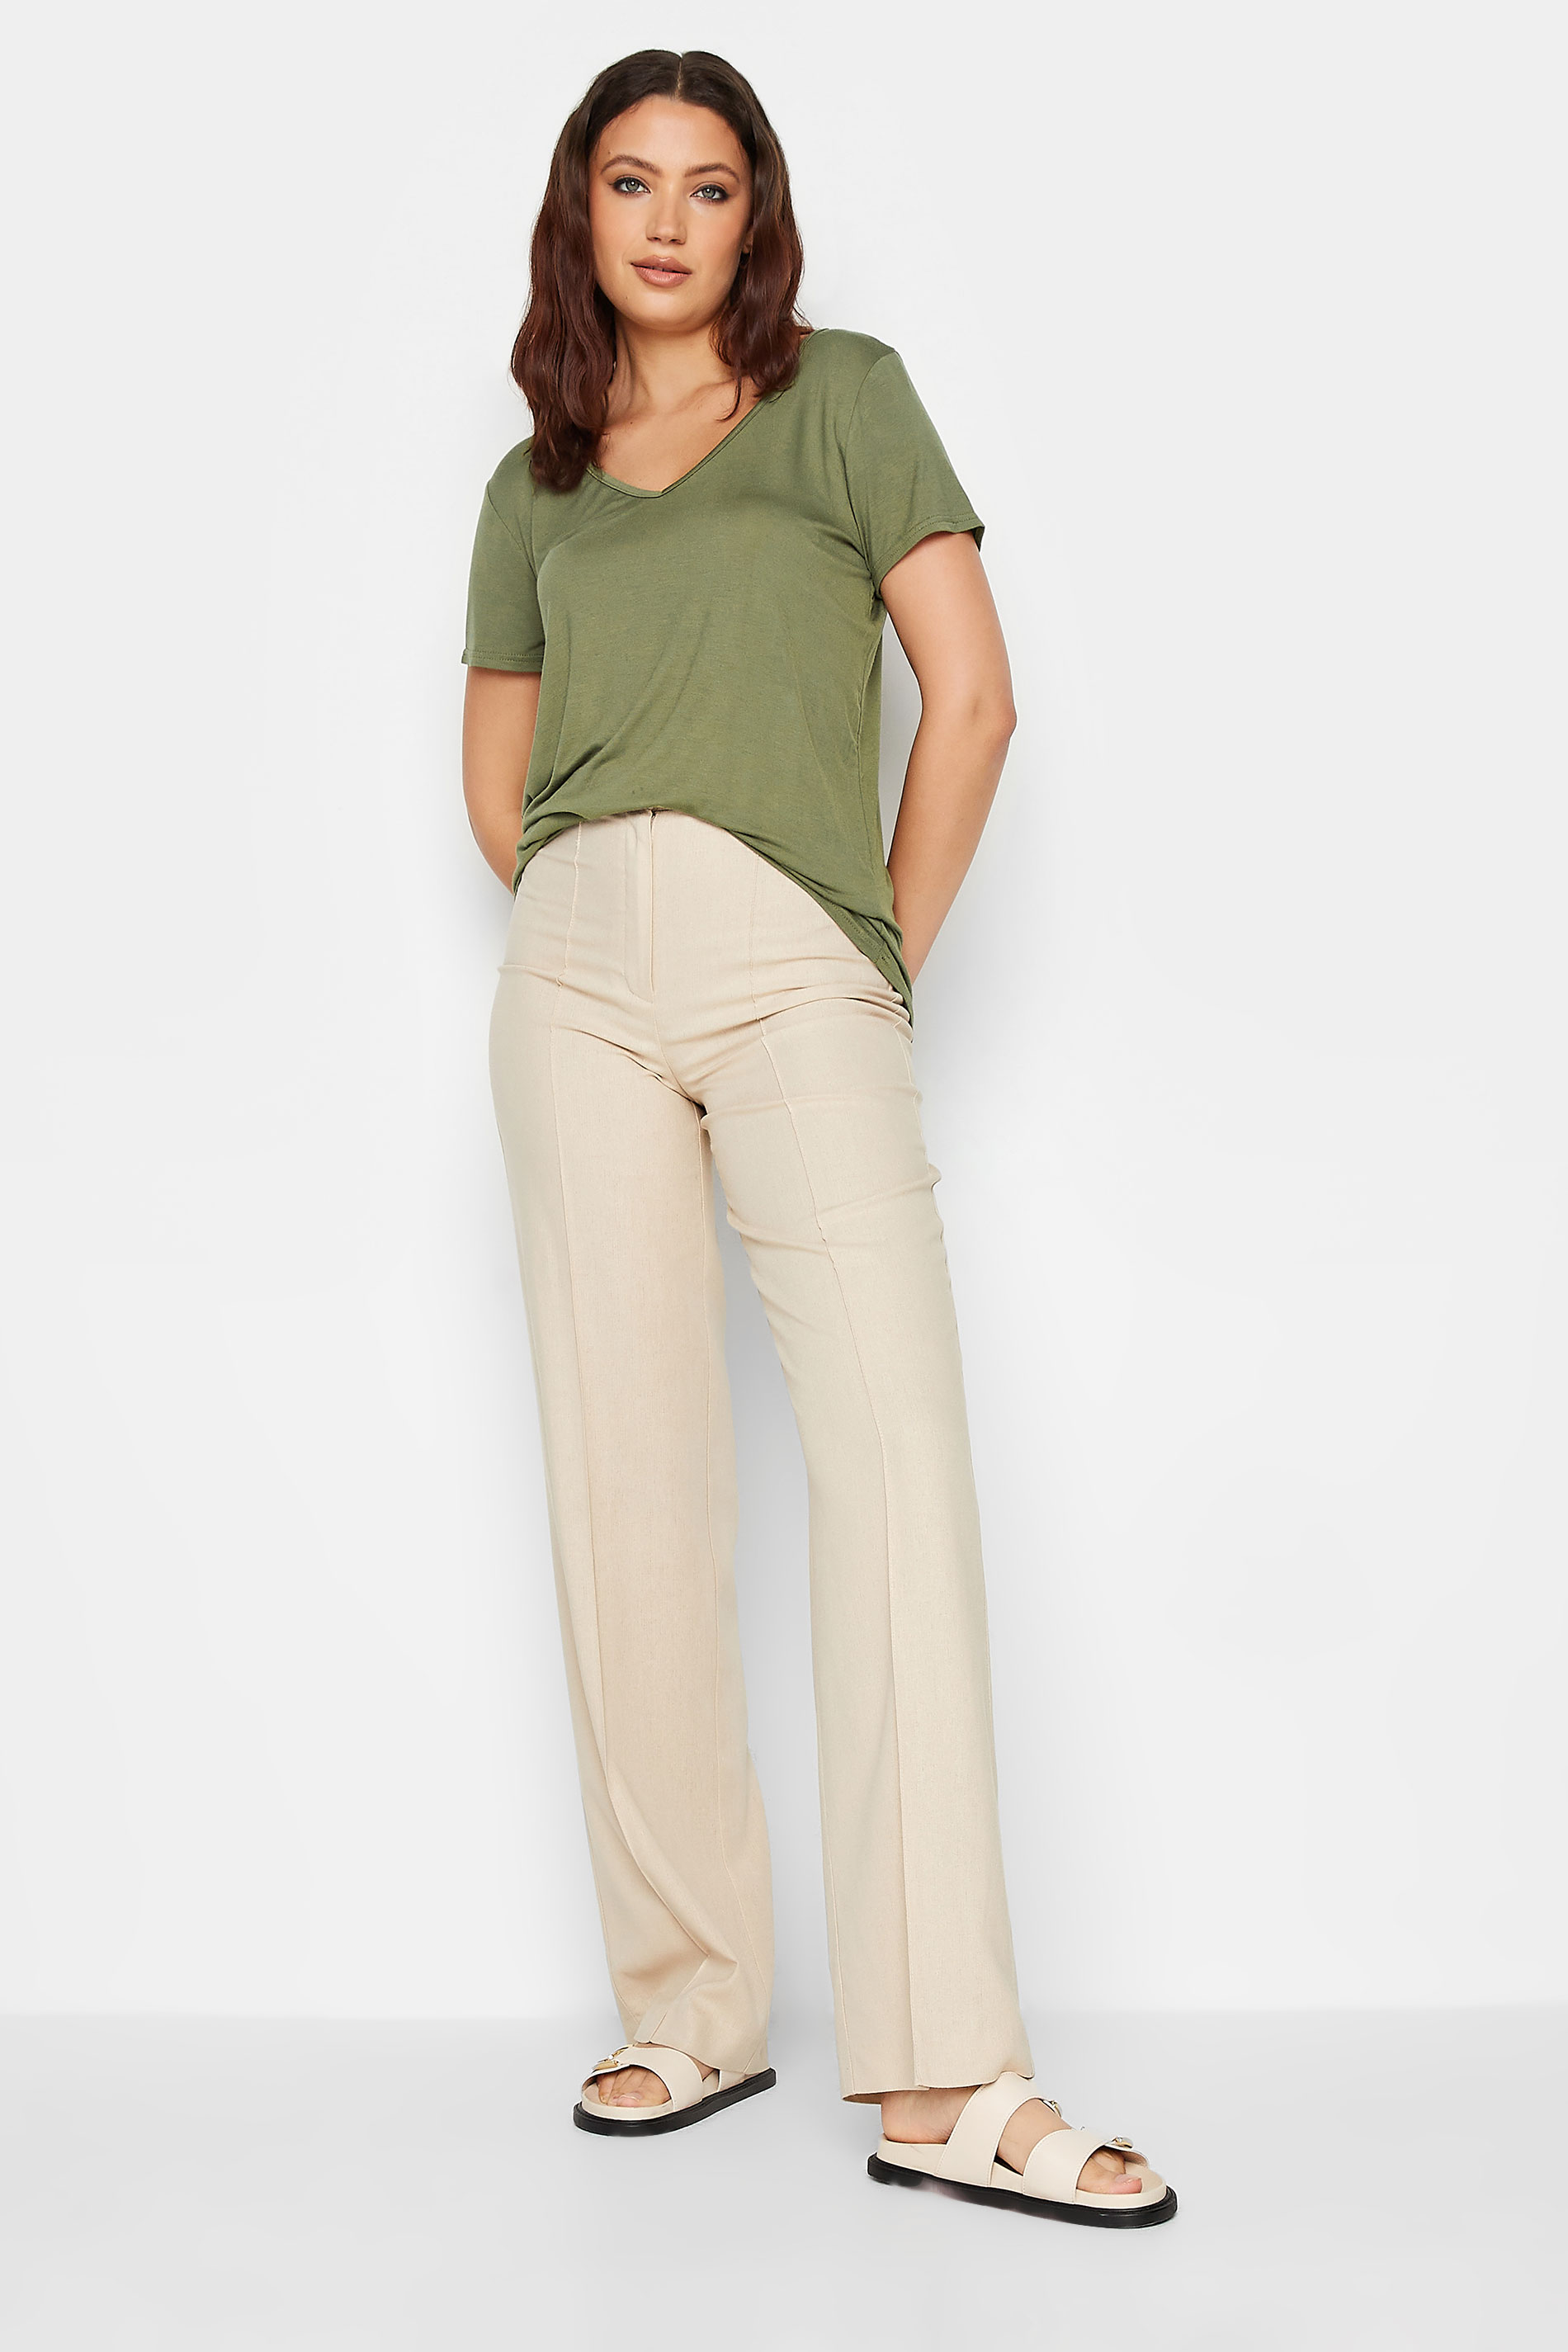 LTS Tall Women's Khaki Green V-Neck T-Shirt | Long Tall Sally 2